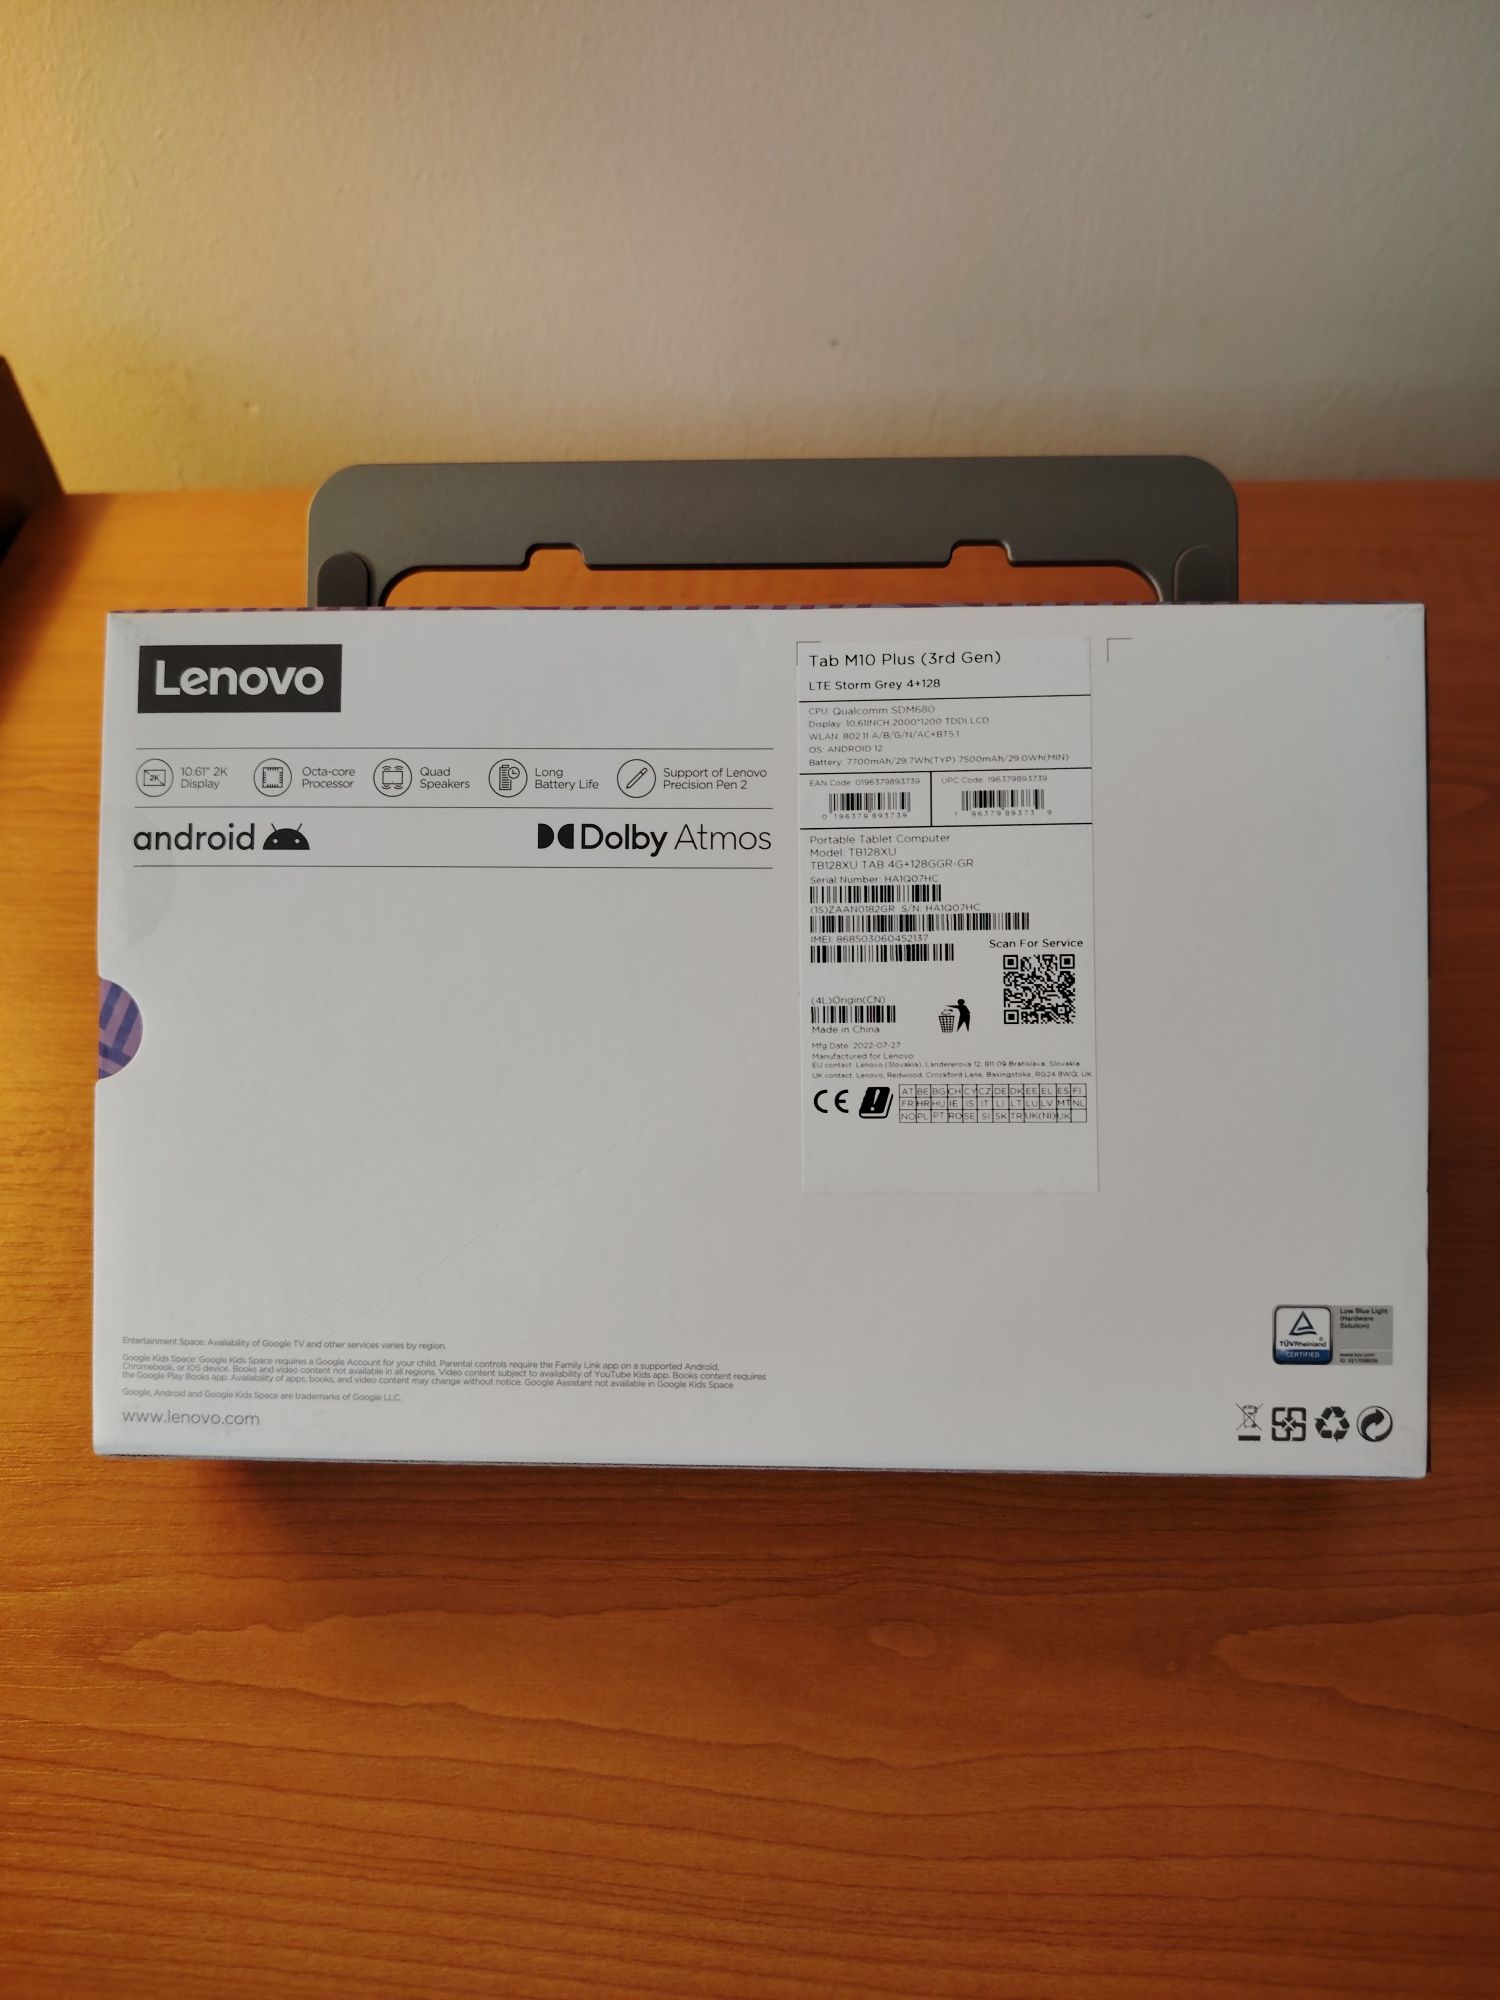 Tableta Lenovo Tab M10 Plus, 4G LTE Storm Grey